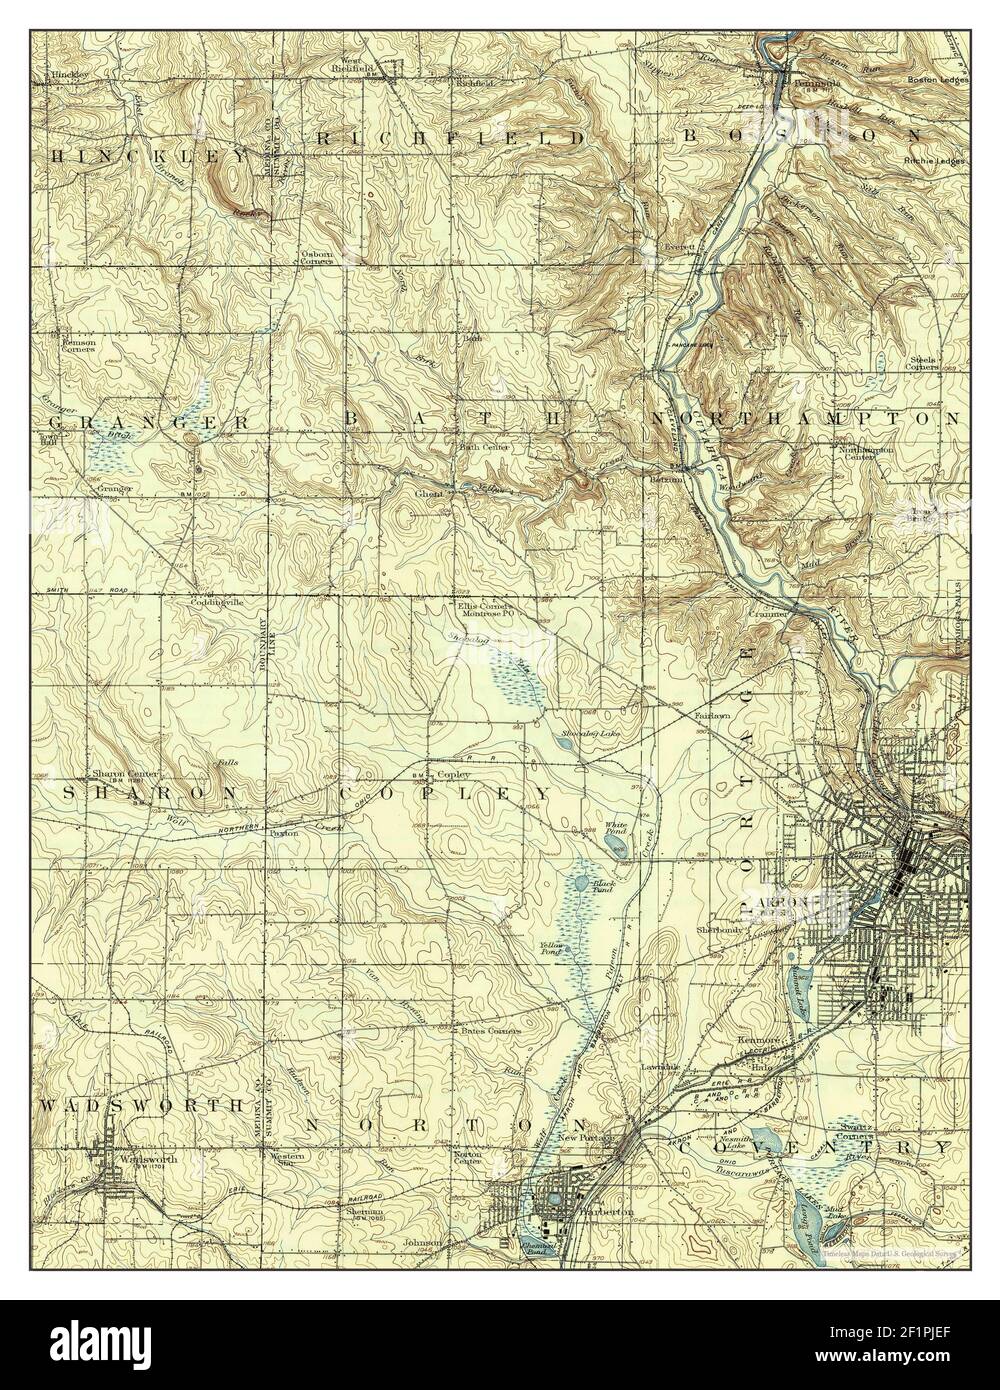 Akron, Ohio, map 1905, 1:62500, United States of America by Timeless Maps, data U.S. Geological Survey Stock Photo